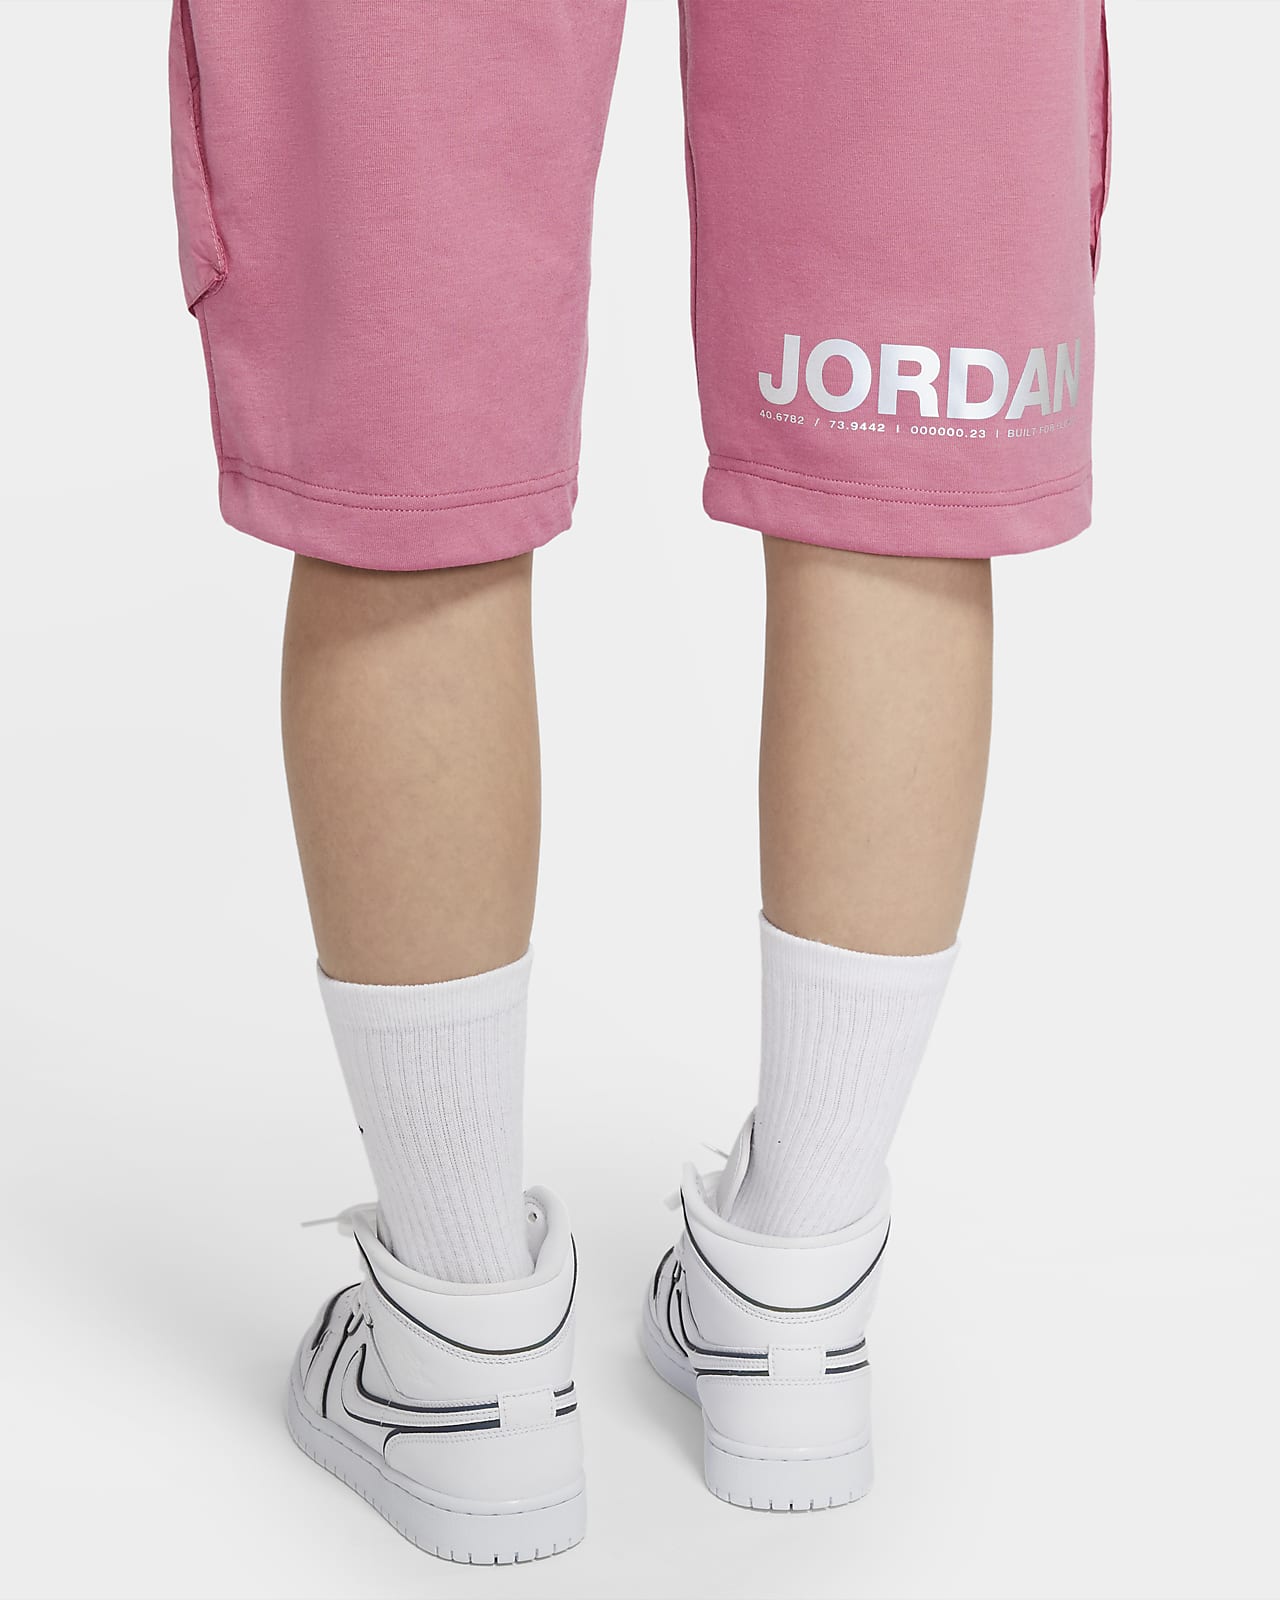 jordan shorts for women